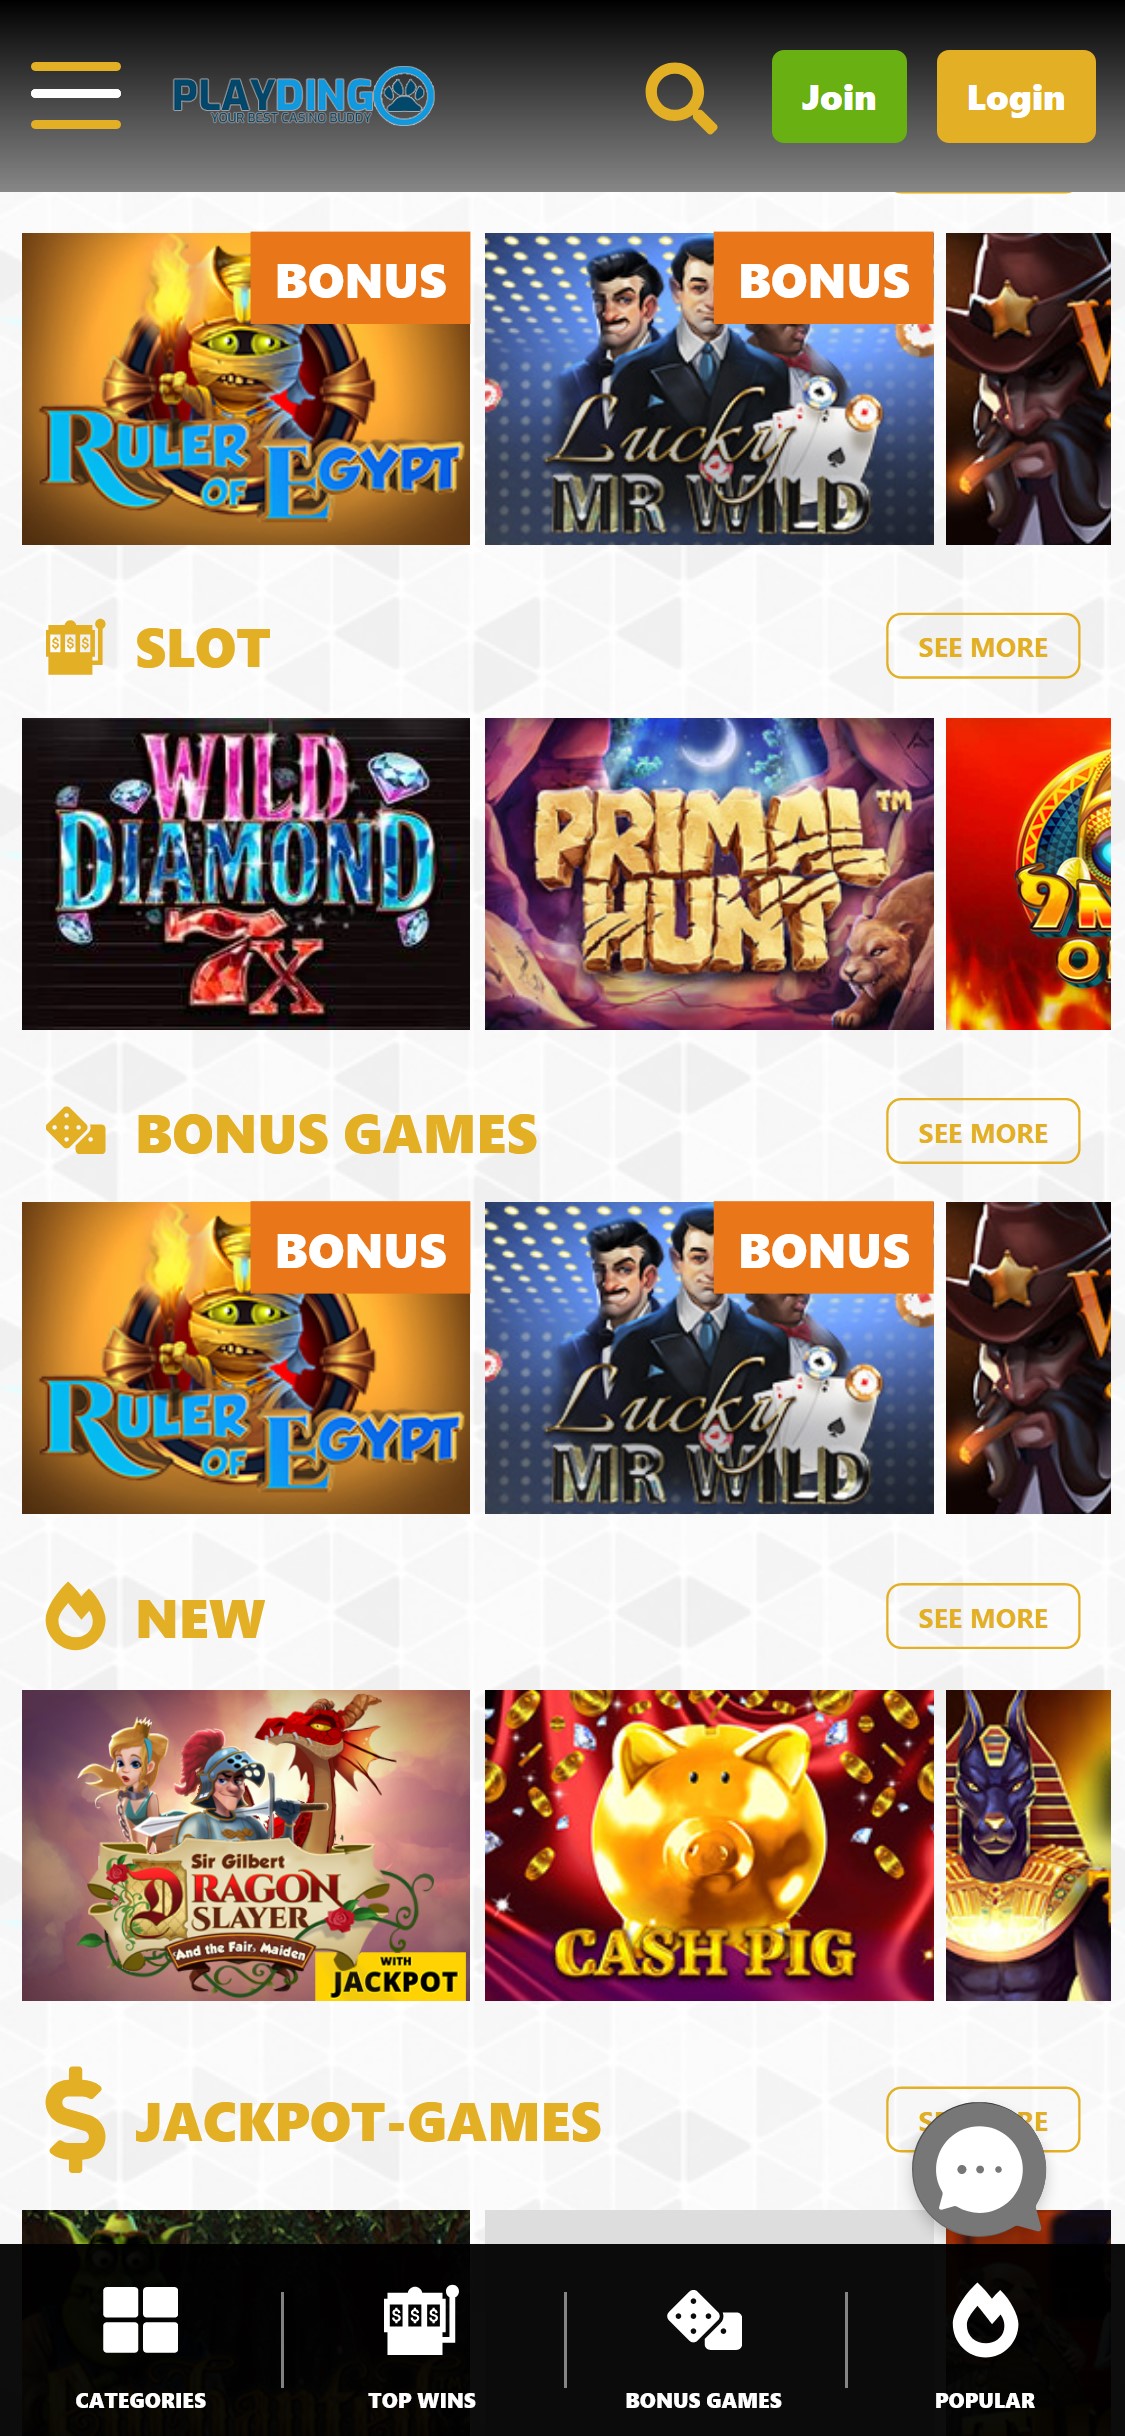 Play Dingo Mobile Games Review